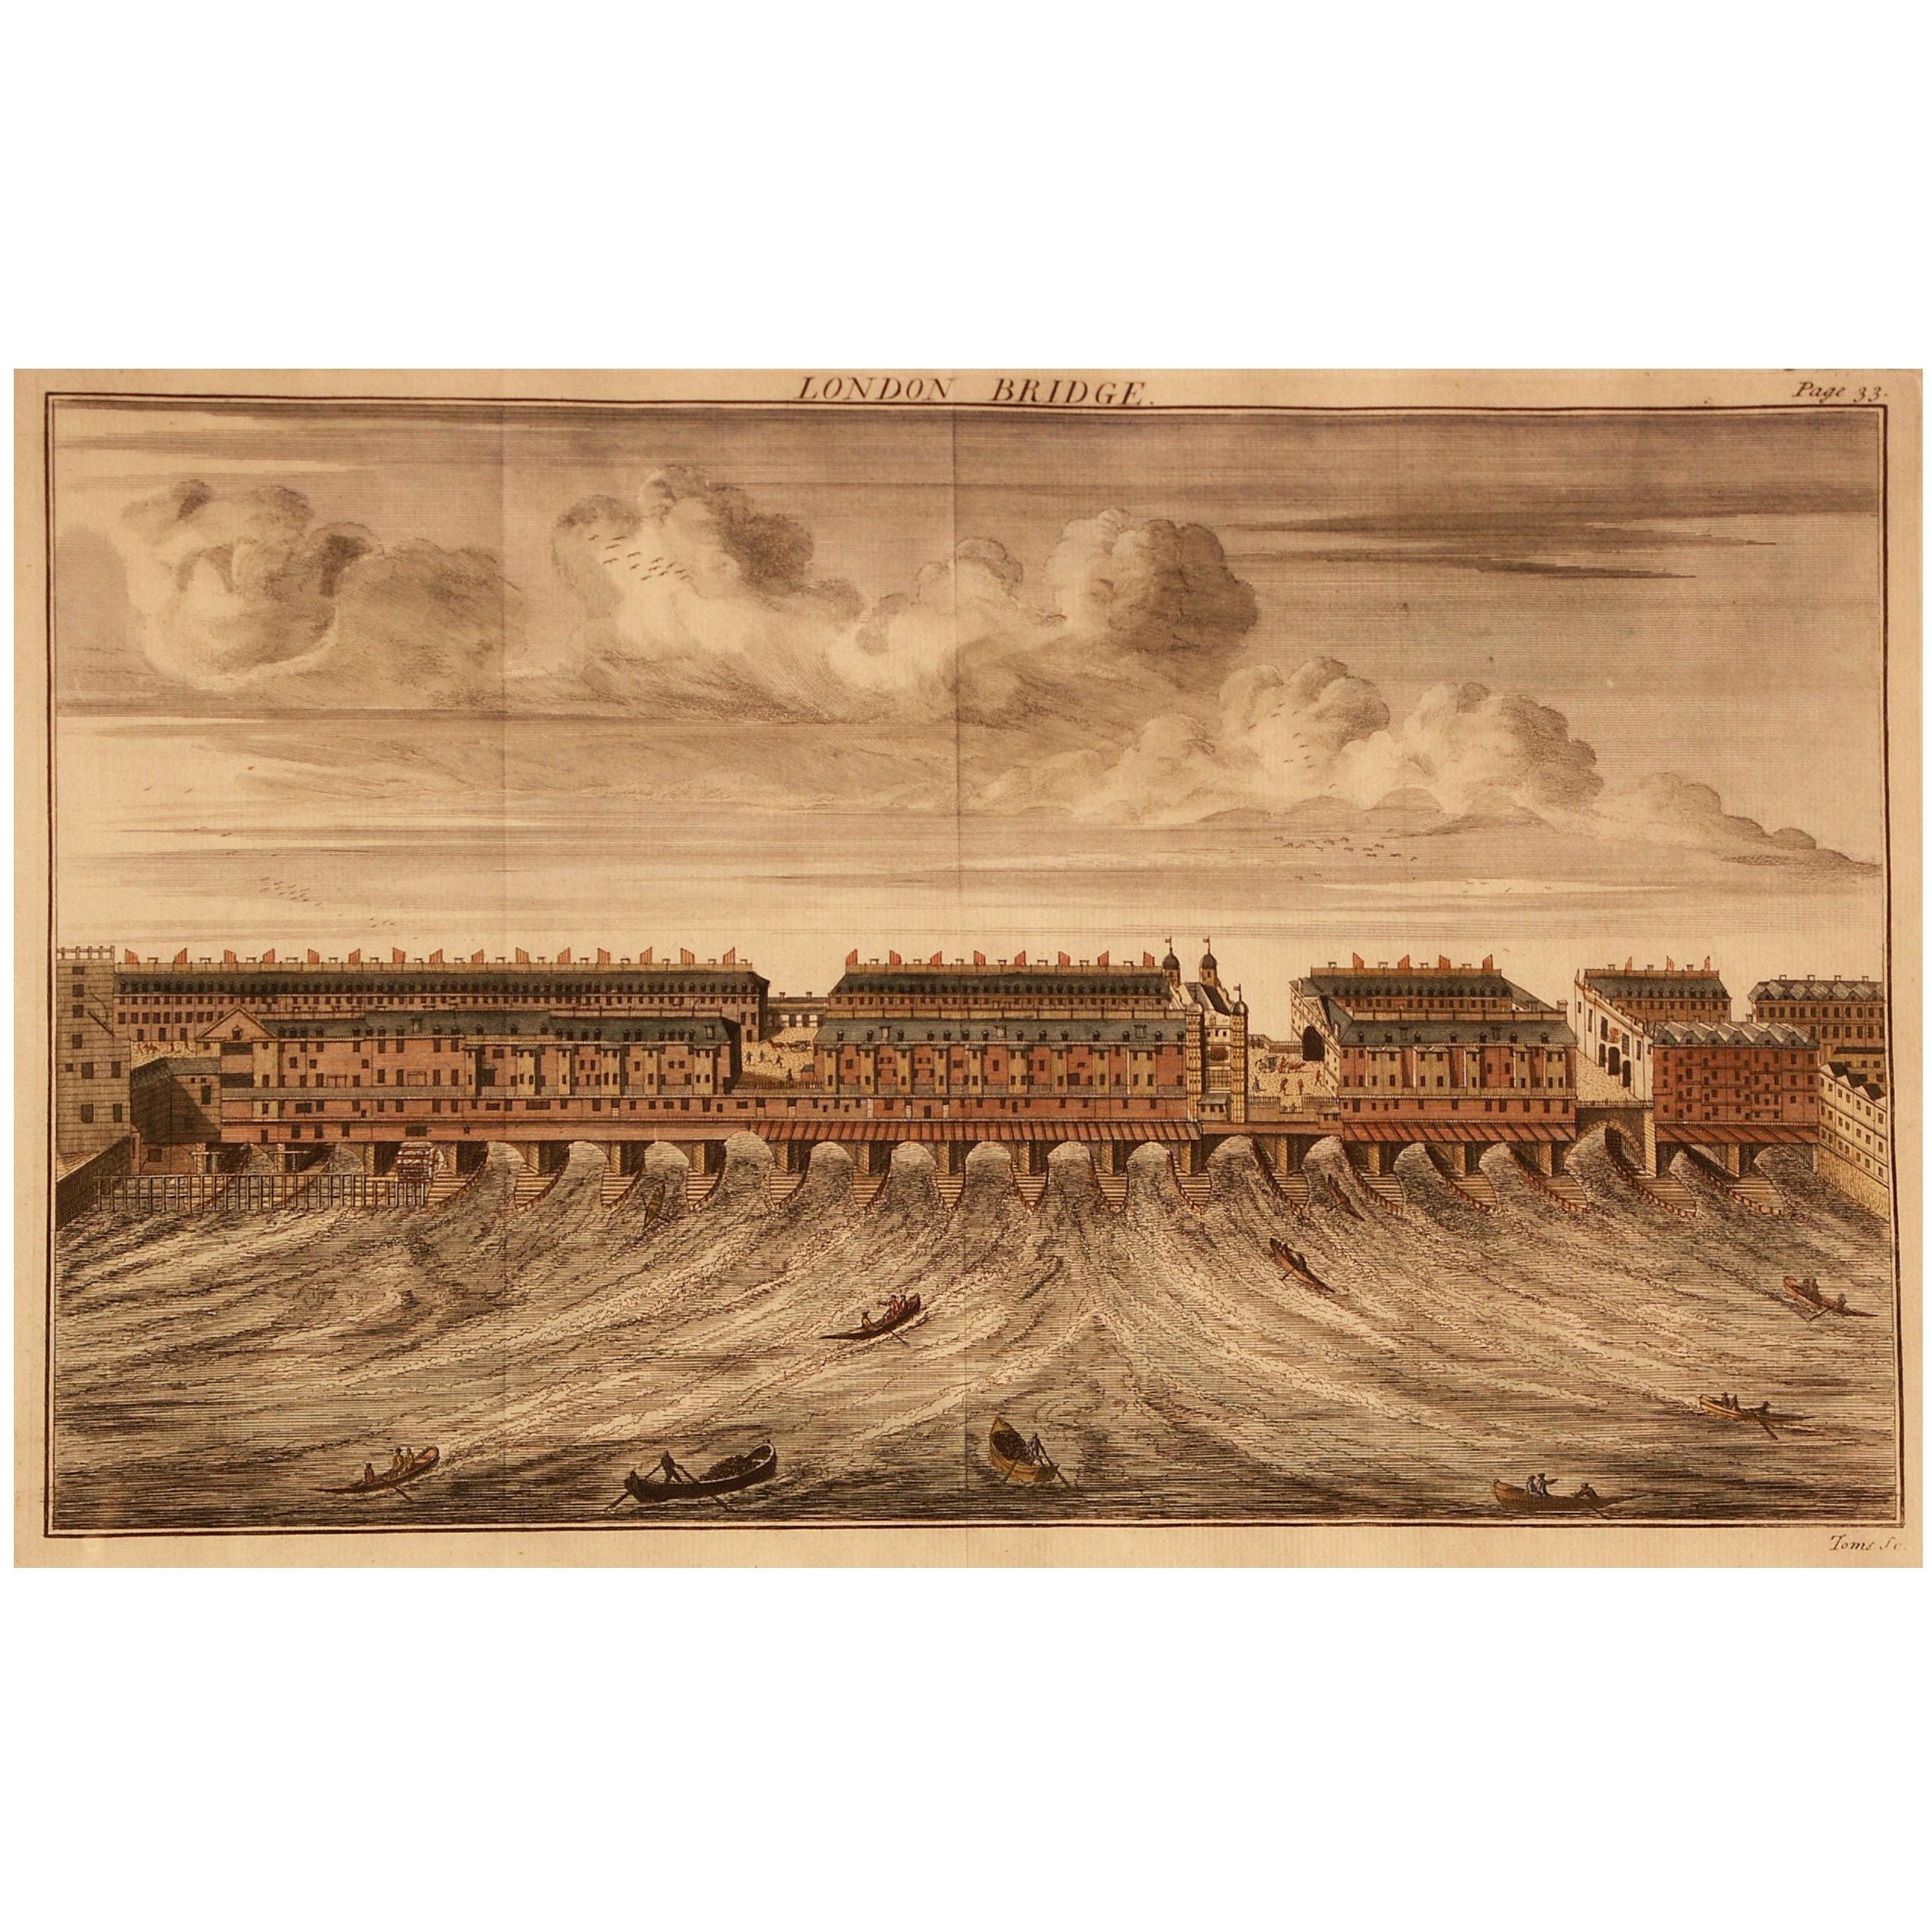 Print, Handcolored, Copperplate, Engraved, London Bridge, William Maitland, 1739